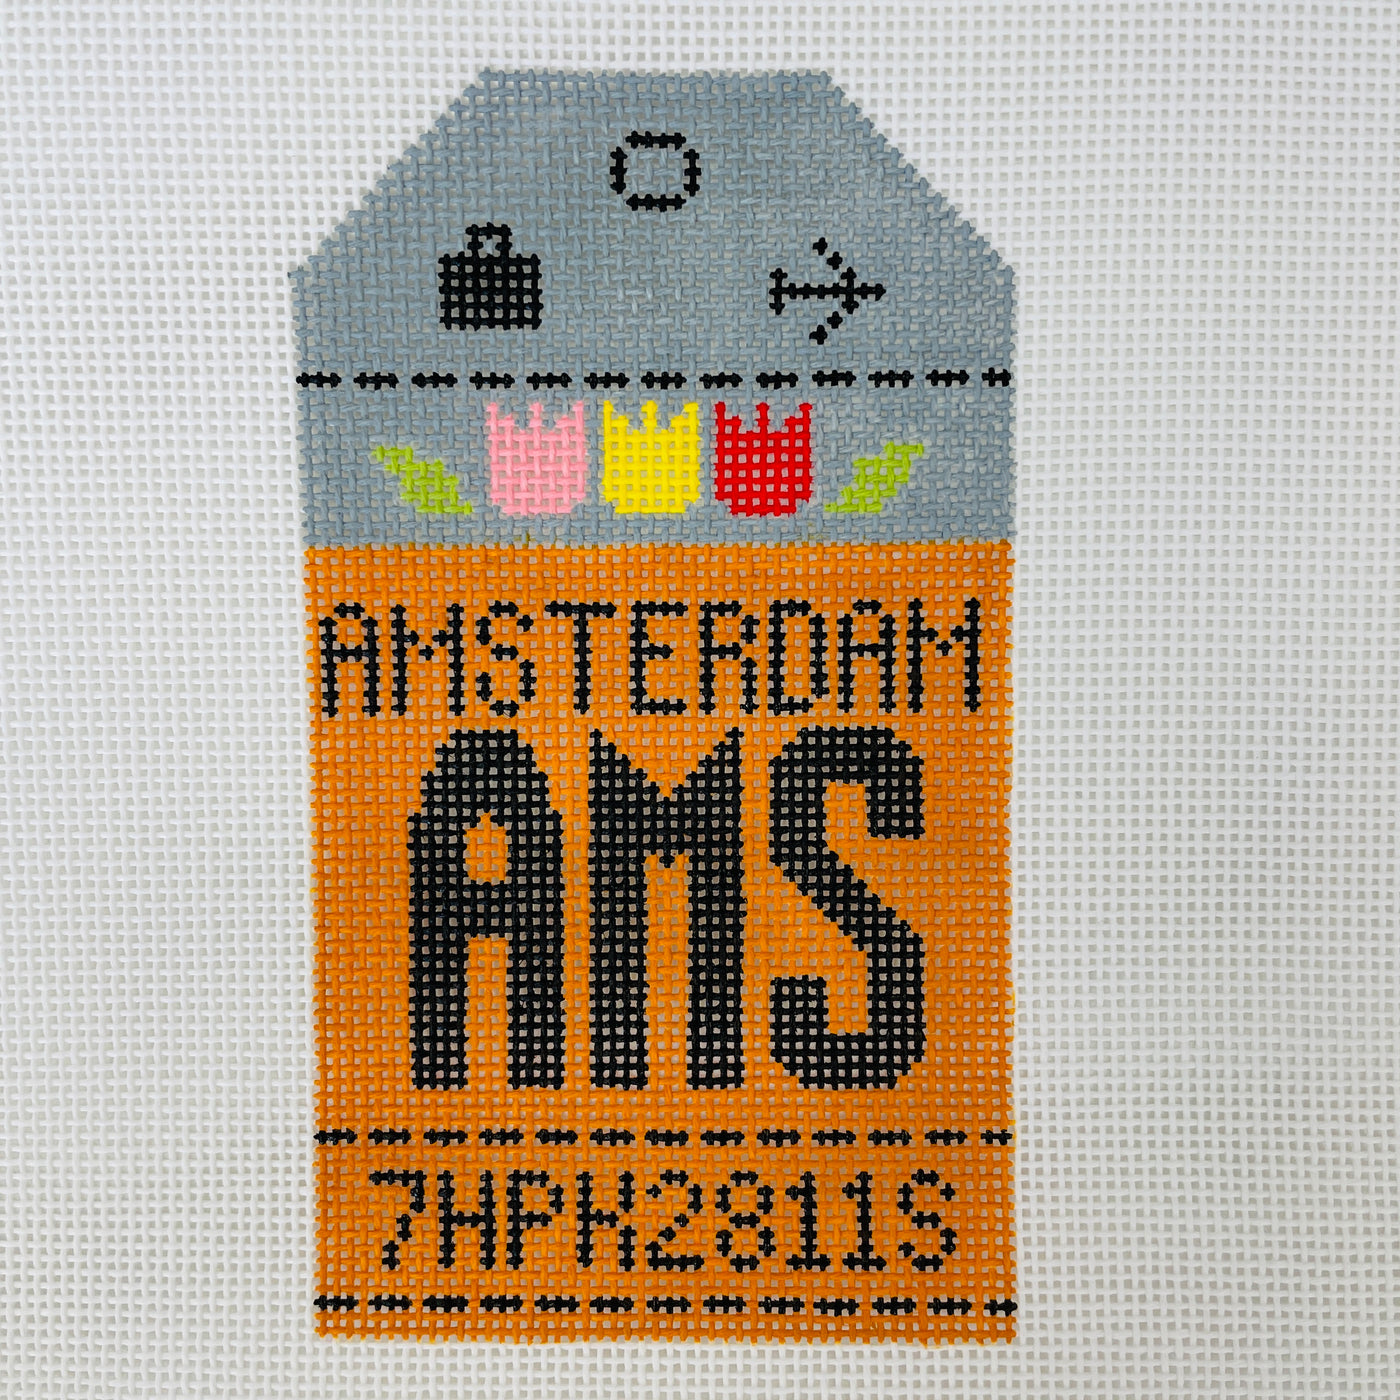 Amsterdam AMS Travel Tag Needlepoint Canvas